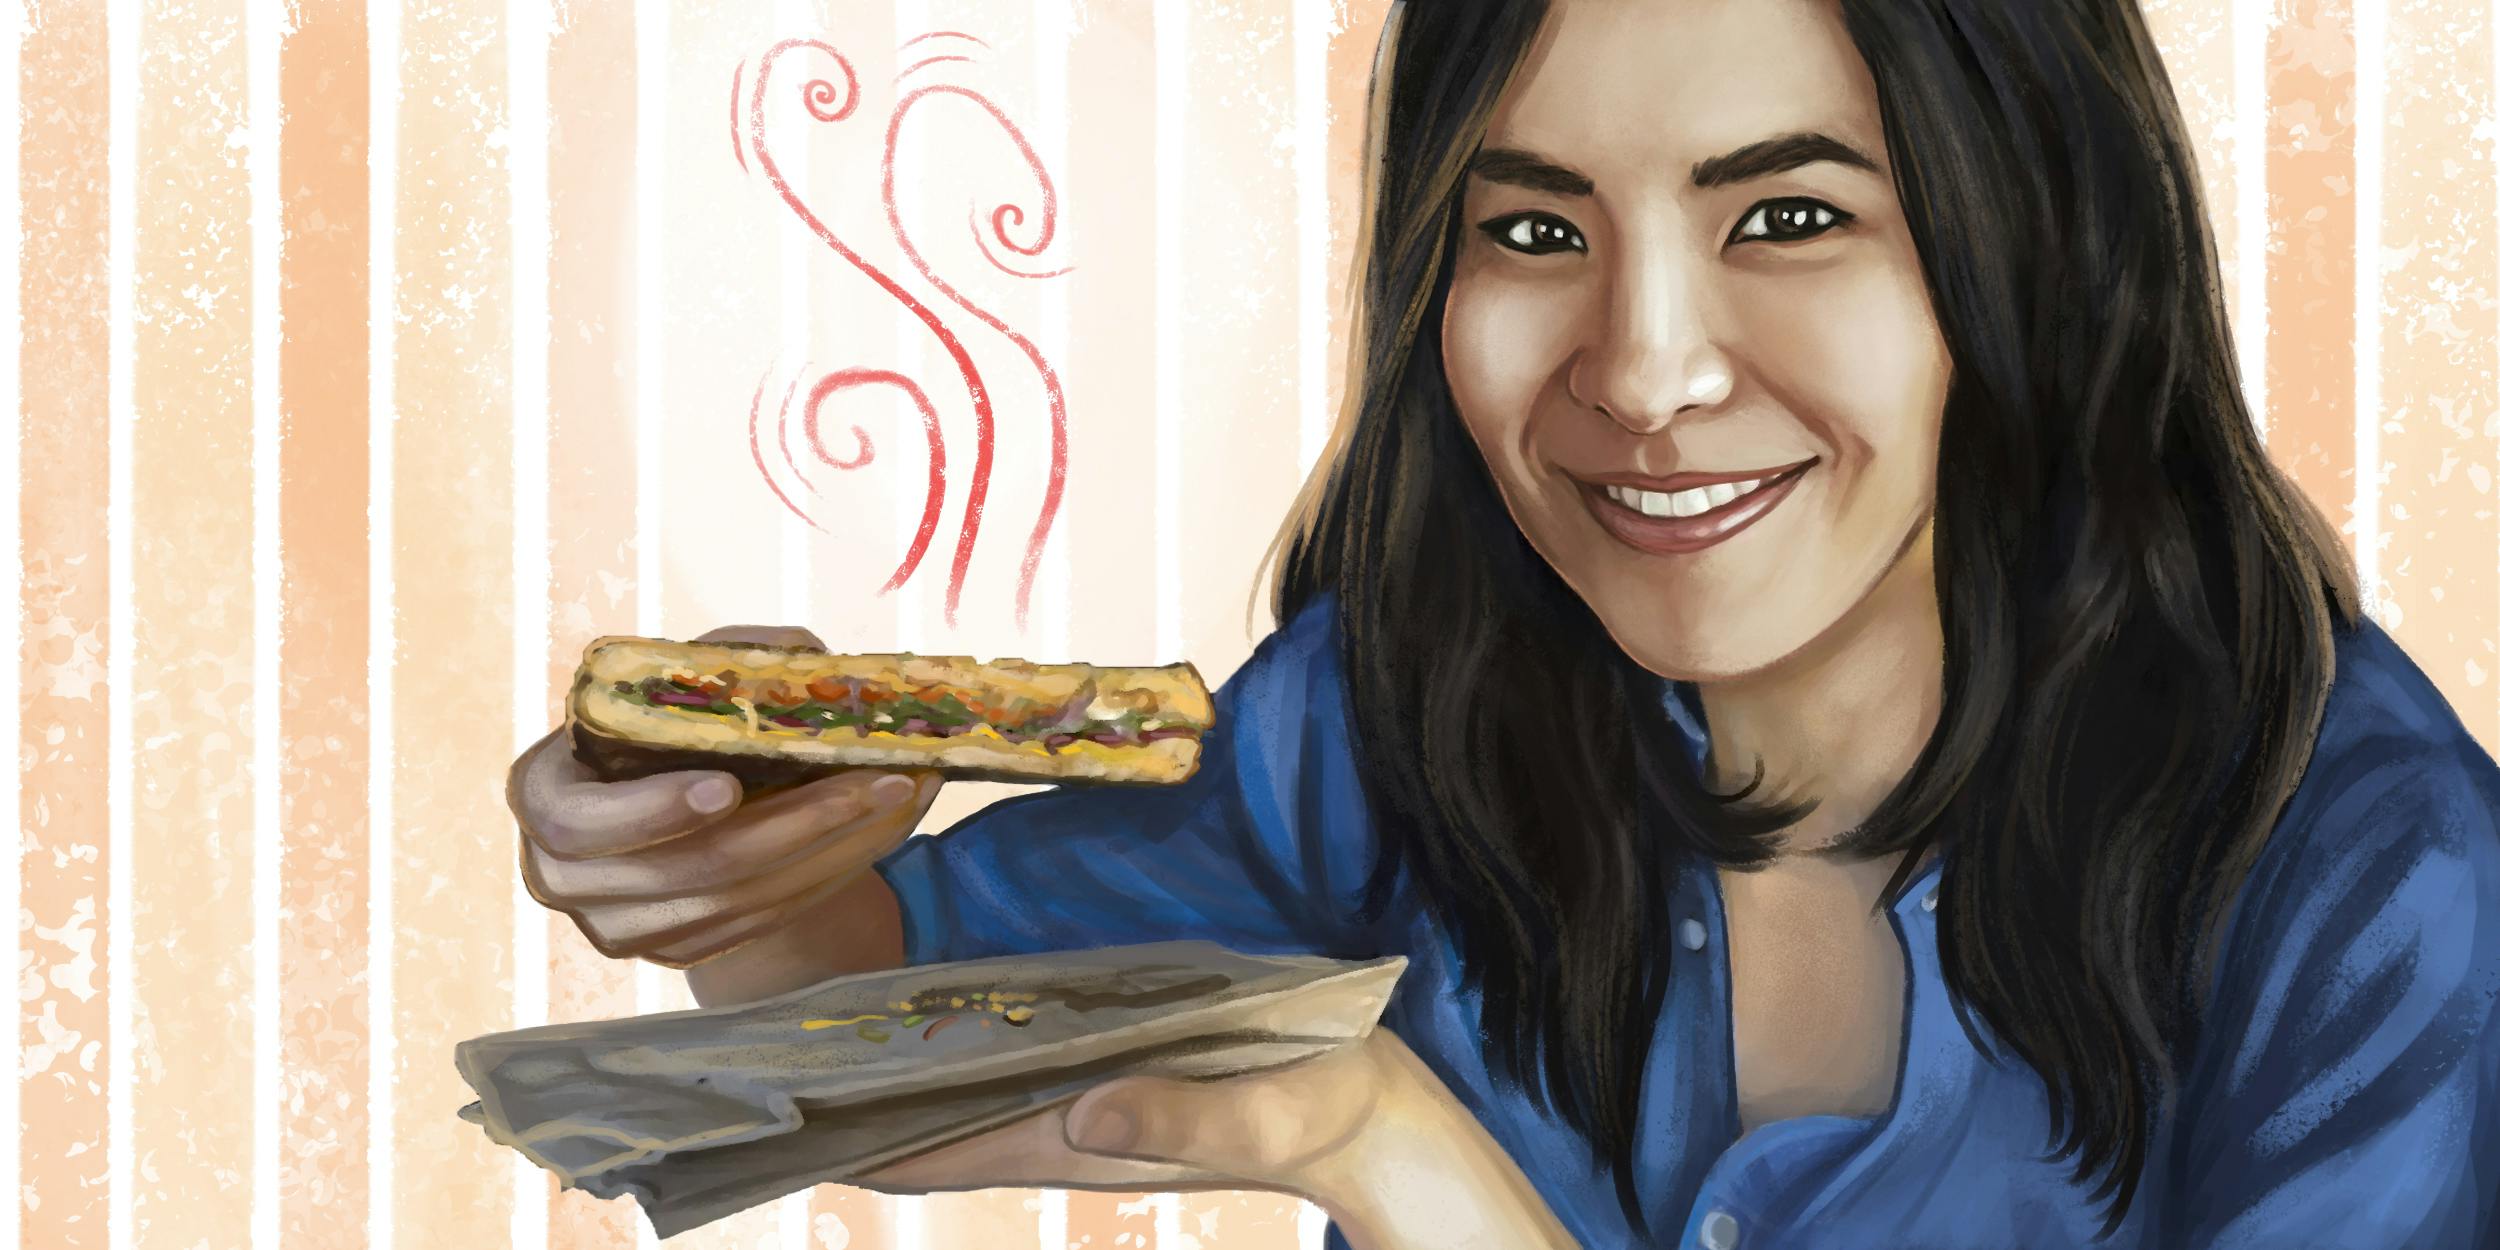 Lynn Chen holding a sandwich